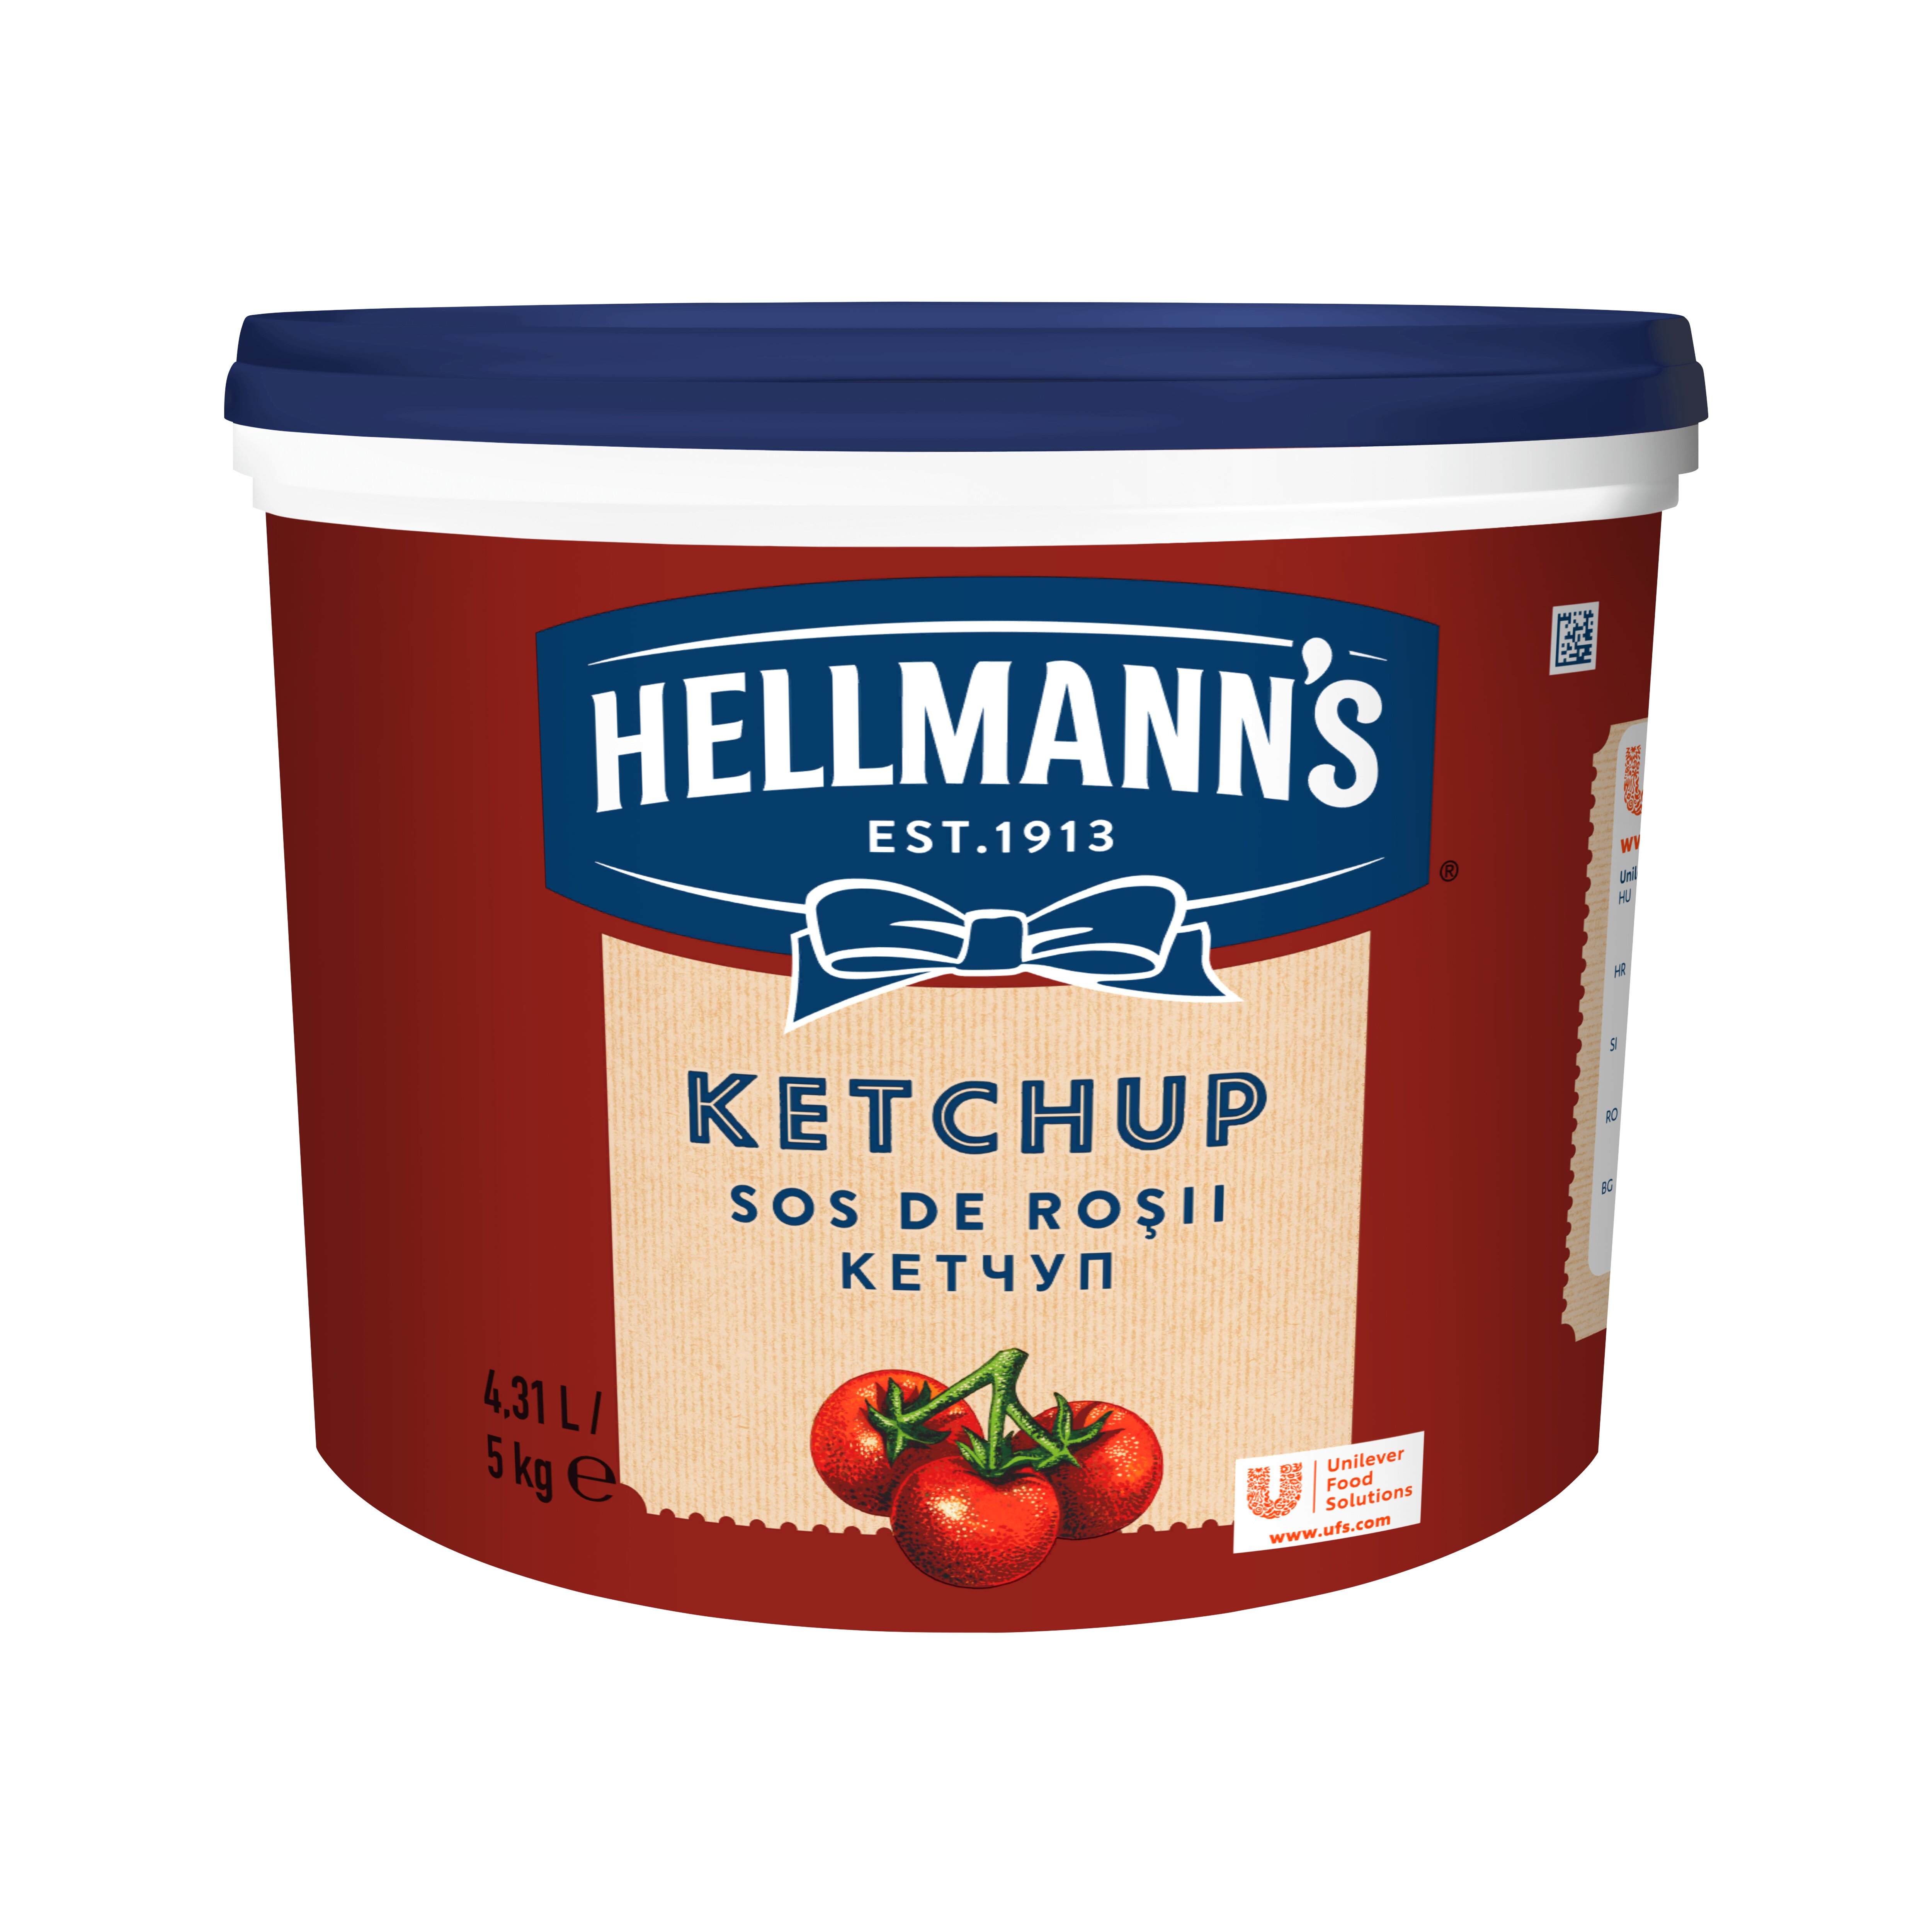 HELLMANN'S Ketchup vödrös 5 kg - 